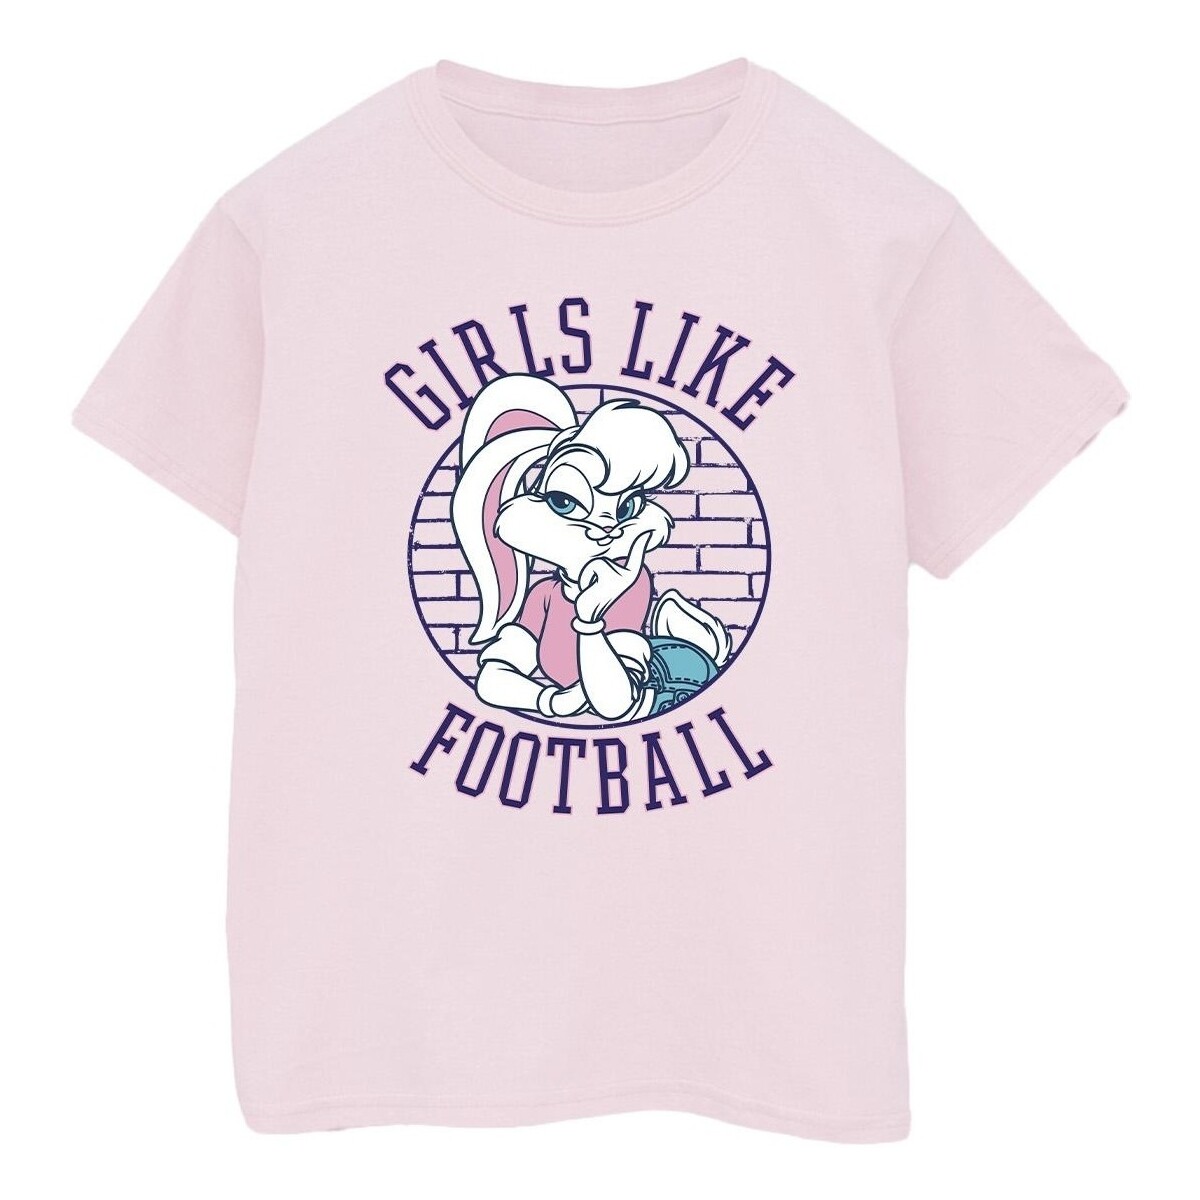 Abbigliamento Donna T-shirts a maniche lunghe Dessins Animés Lola Bunny Girls Like Football Rosso